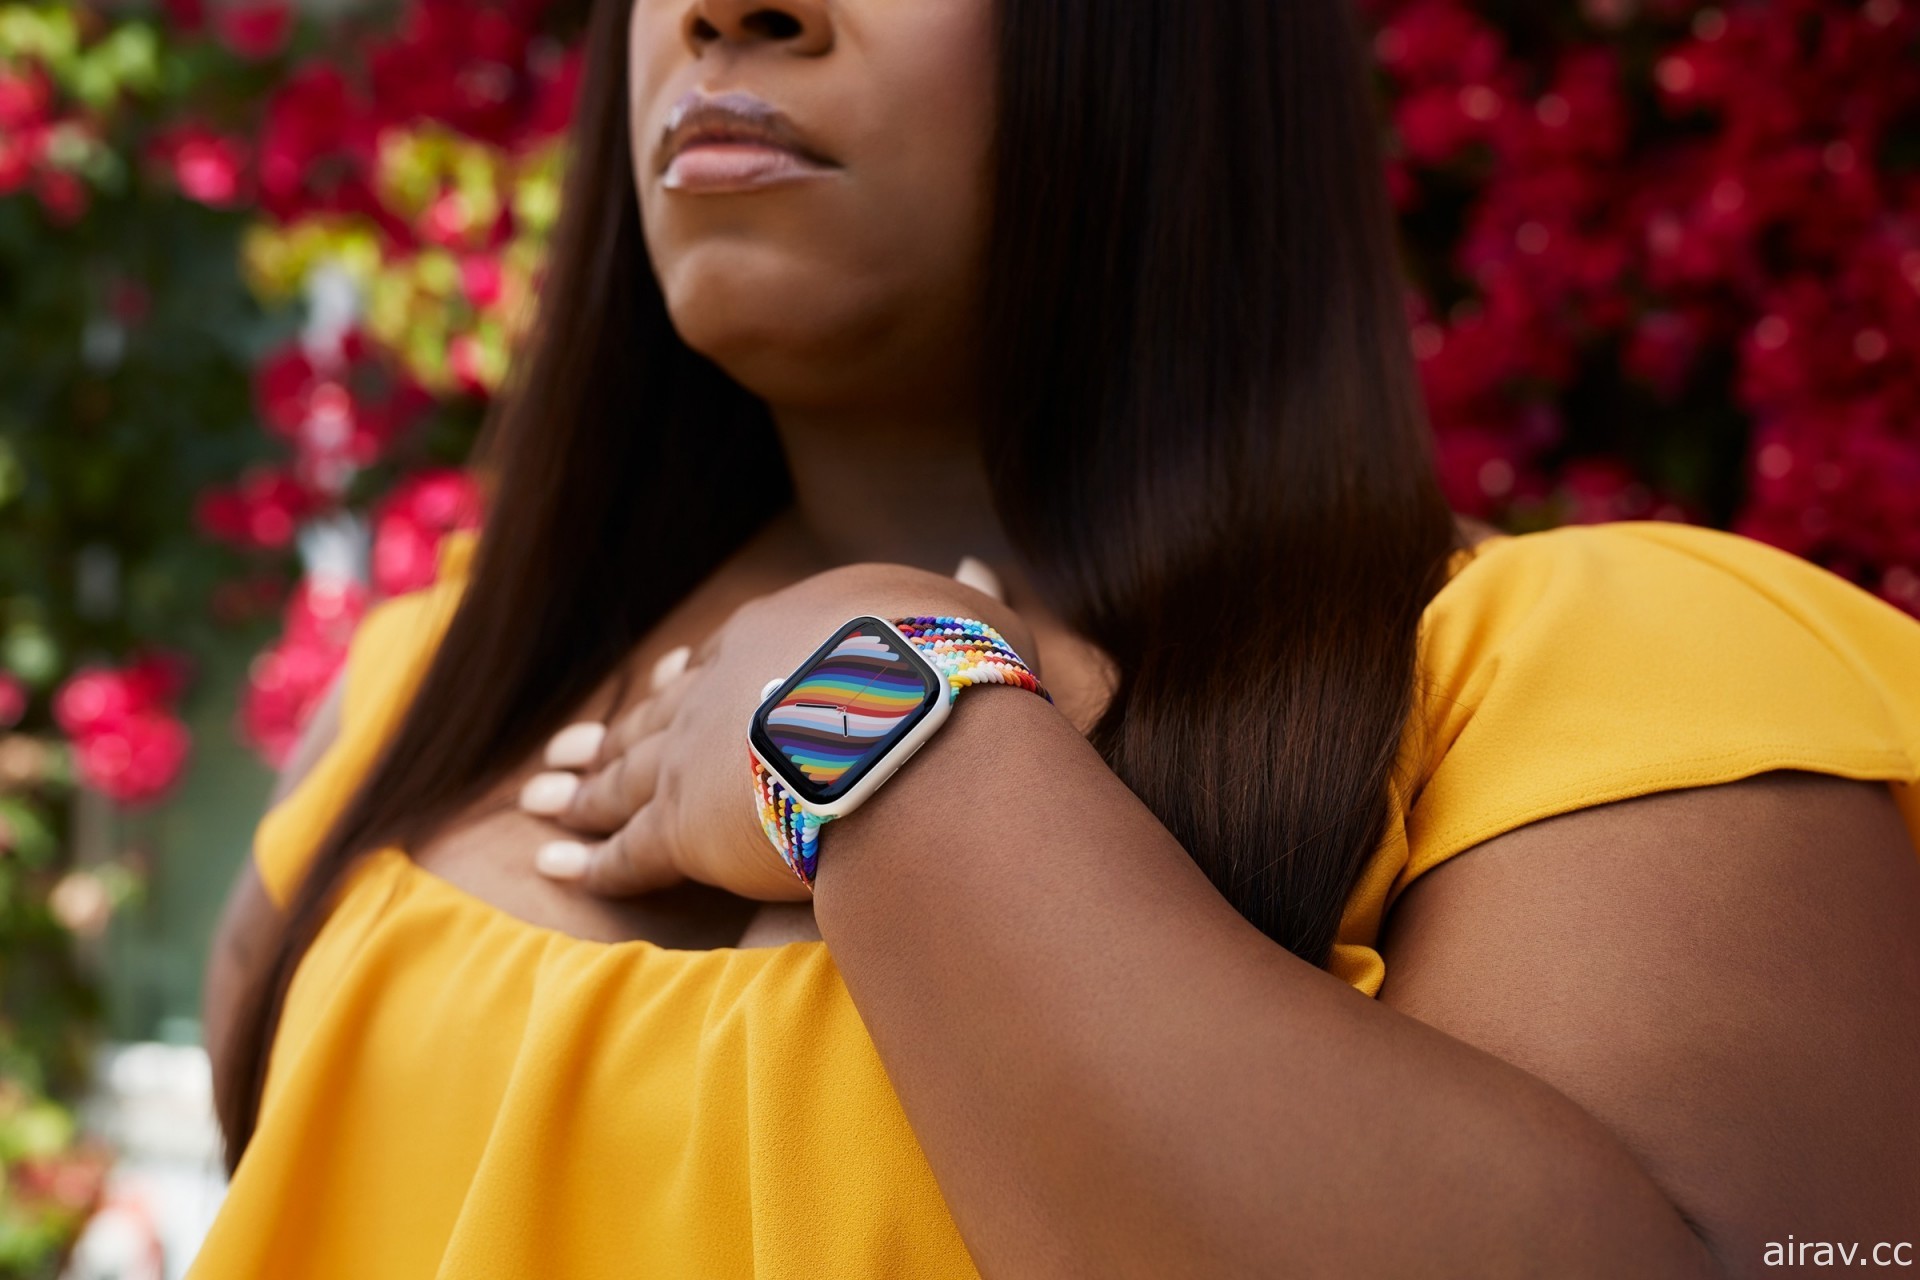 Apple Watch 推出全新彩虹版錶帶 頌揚與支持多元的 LGBTQ+ 運動